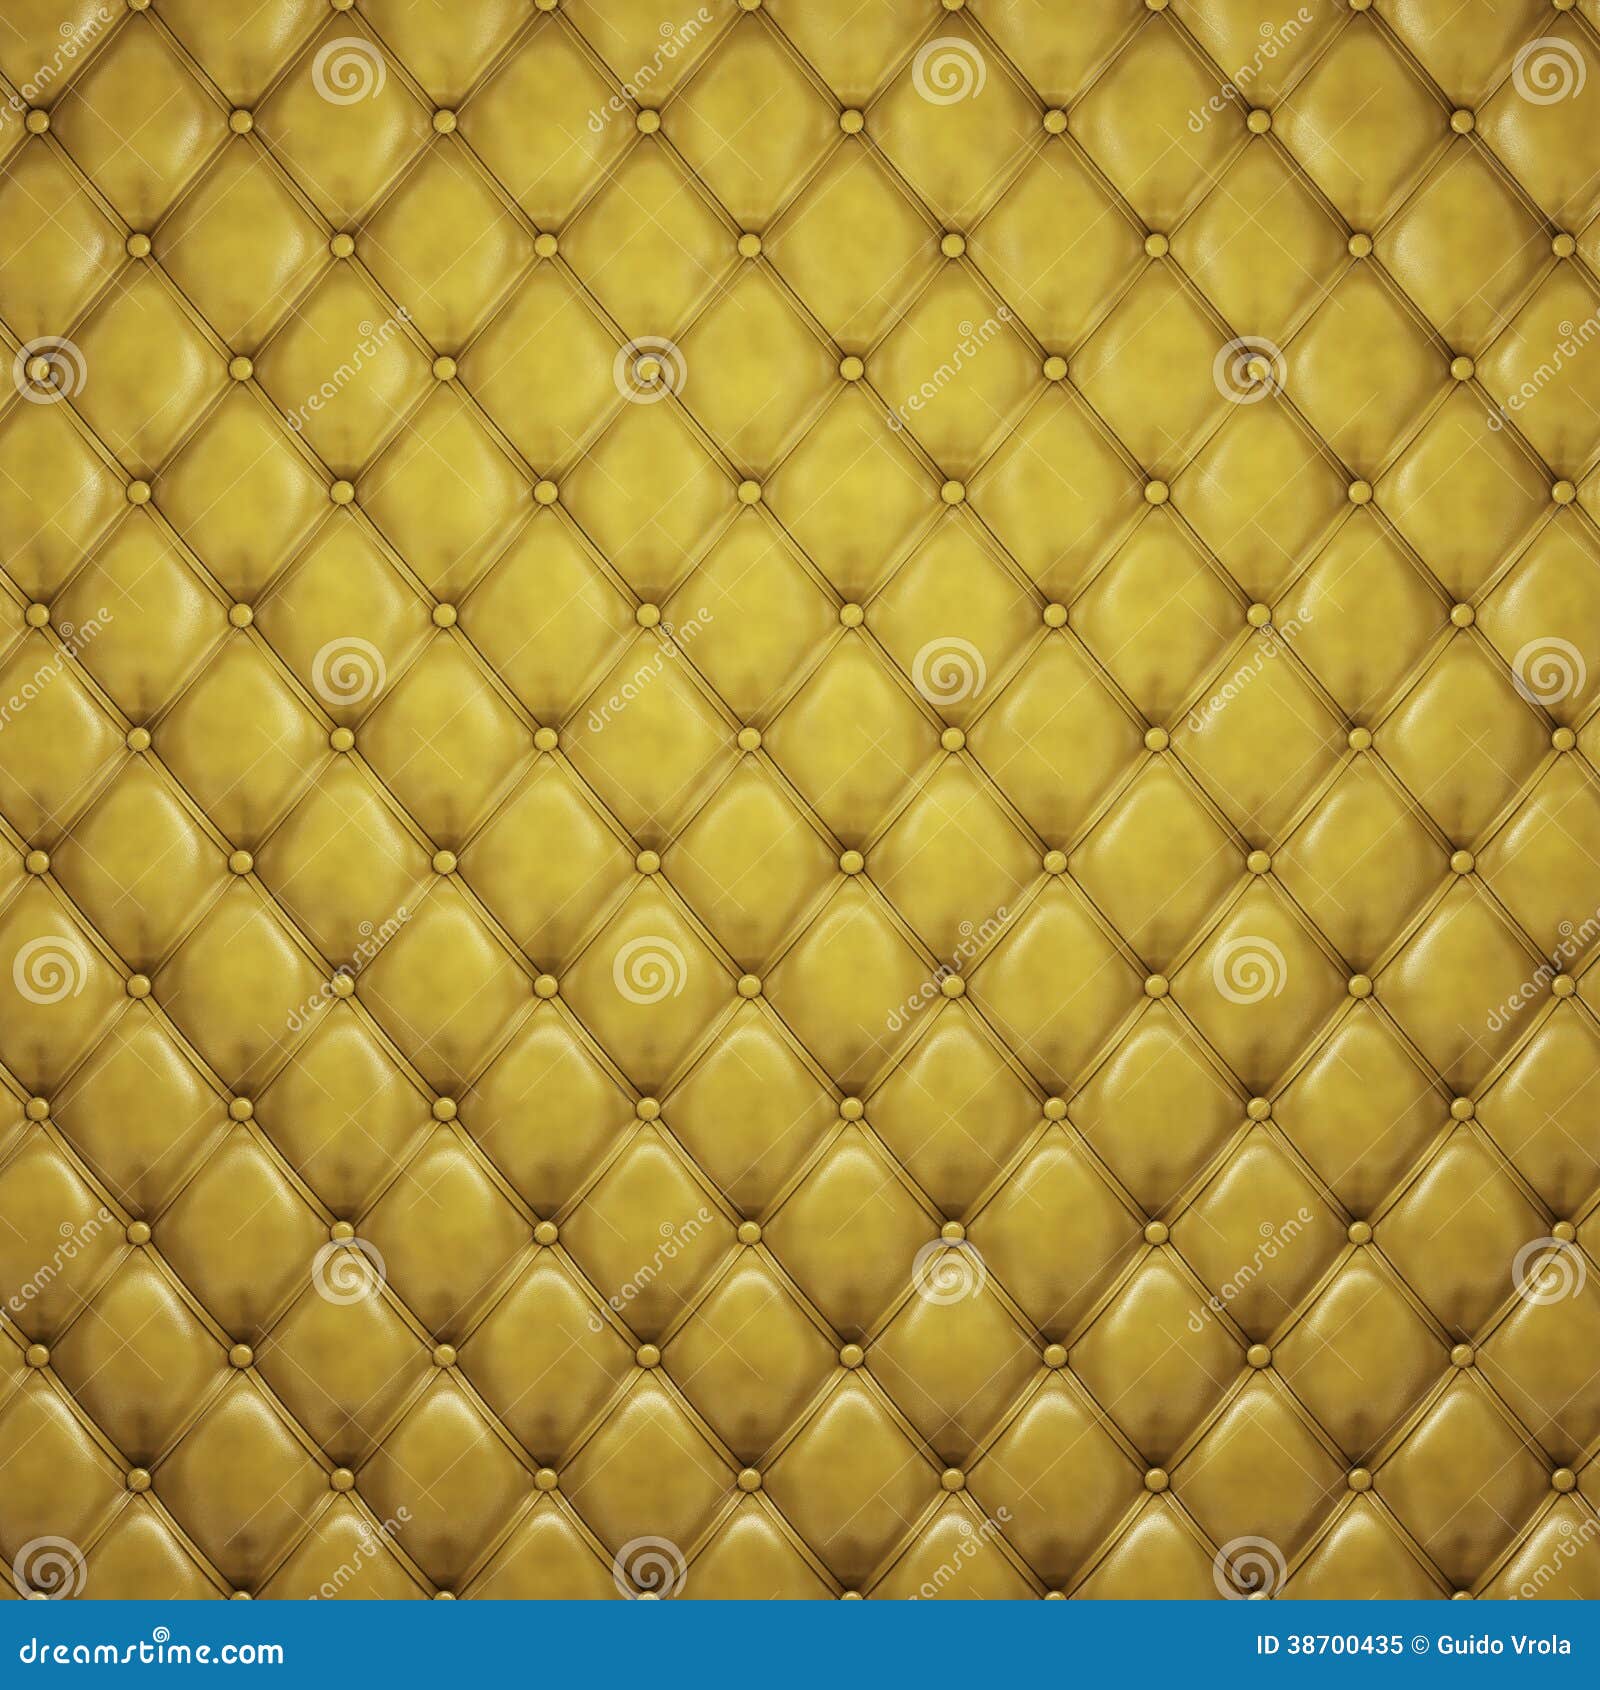 golden padding background